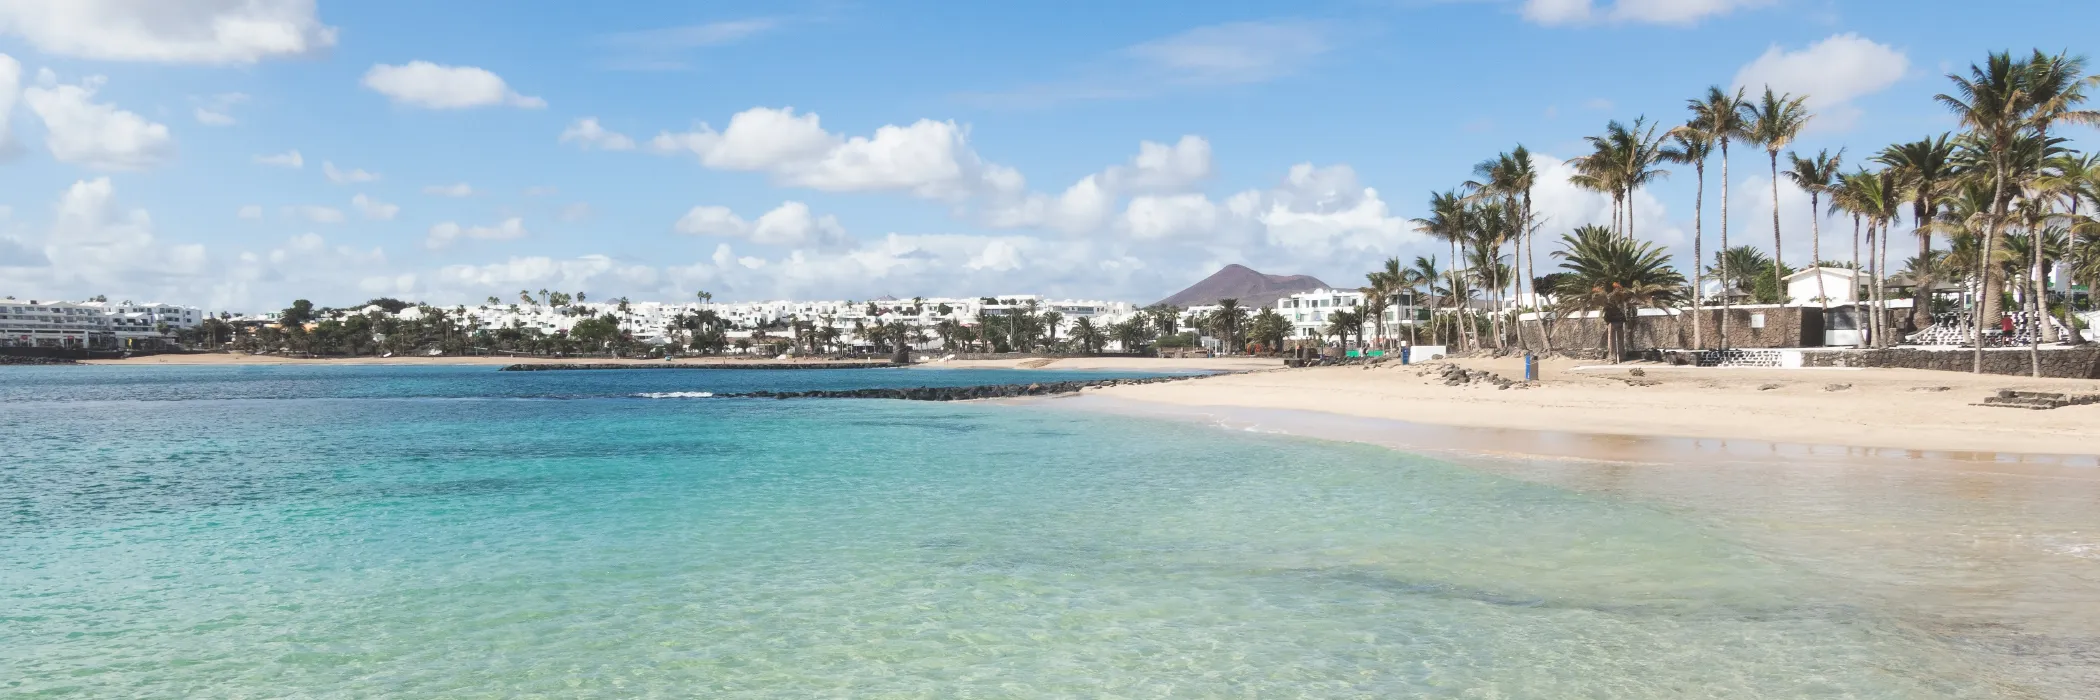 Costa Teguise Holidays - Lanzarote